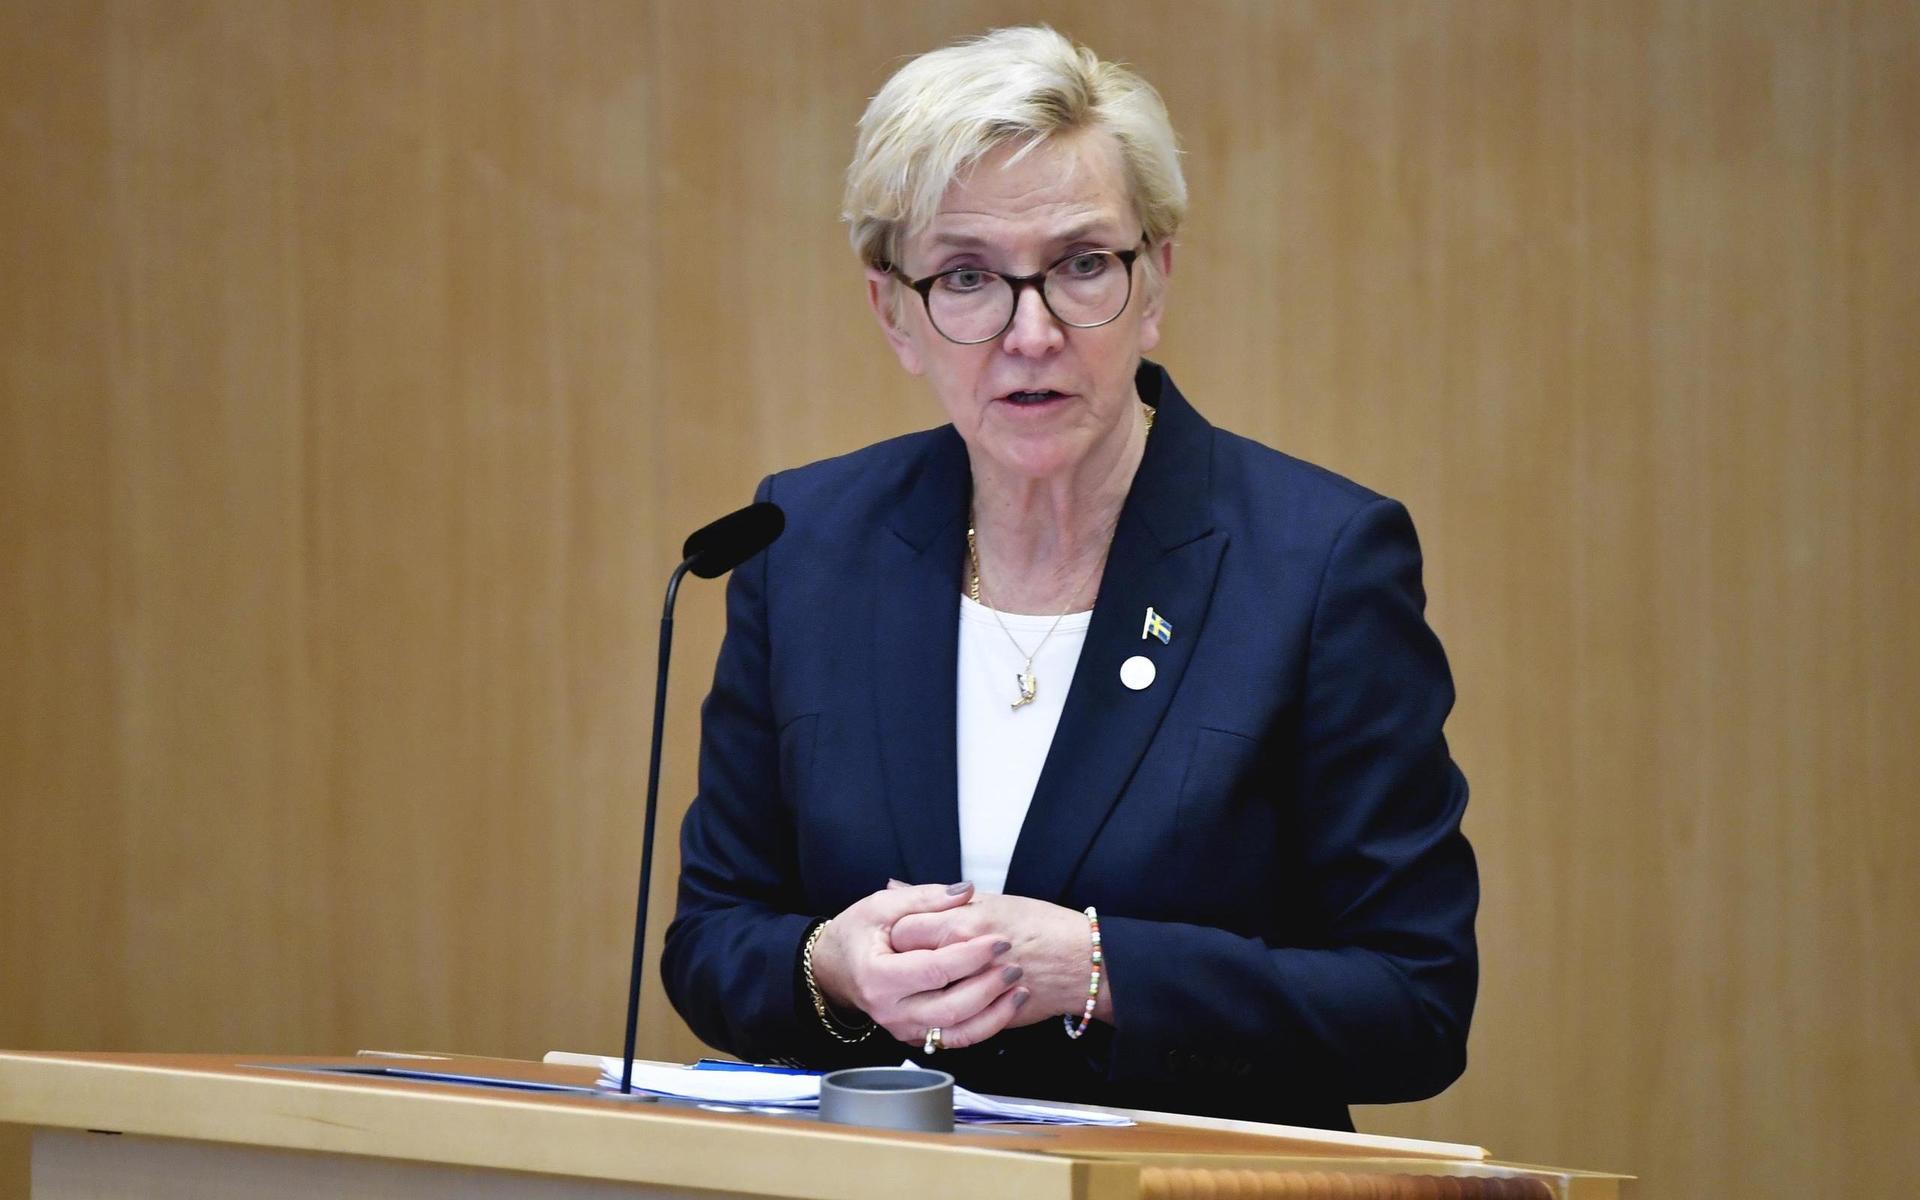 STOCKHOLM 20210224Riksdagsledamoten Kerstin Lundgren (C) under den utrikespolitiska debatten i riksdagen.Foto: Henrik Montgomery / TT kod 10060